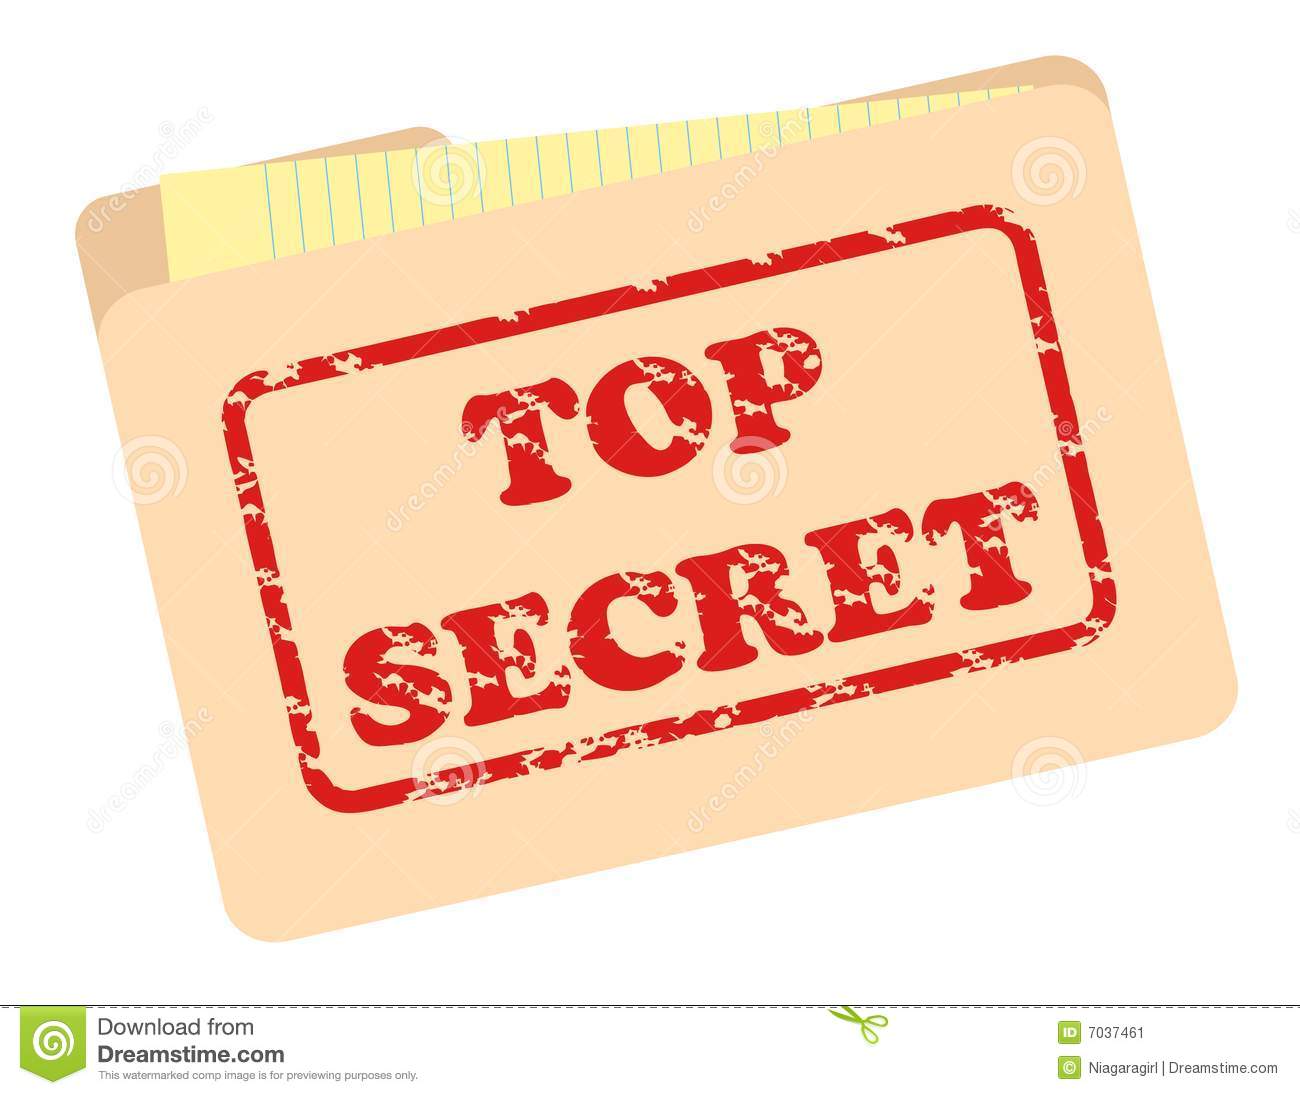     Secret Clip Art Top Secret File Top Secret Clip Art Top Secret Clip